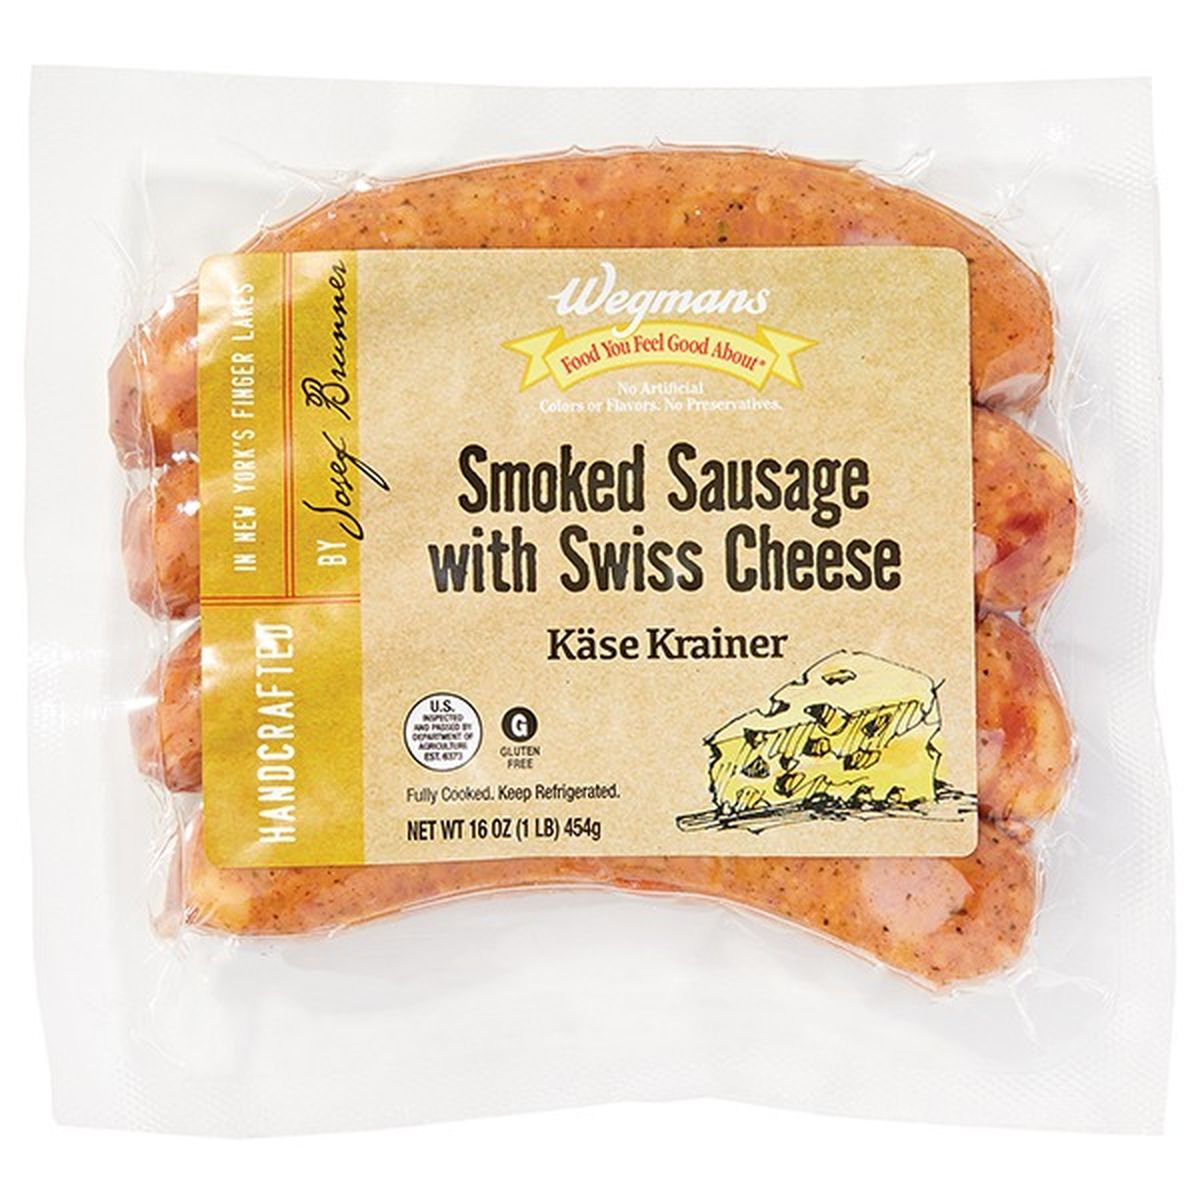 Calories in Wegmans Sausage, Kase Krainer, Smoked with Swiss Cheese